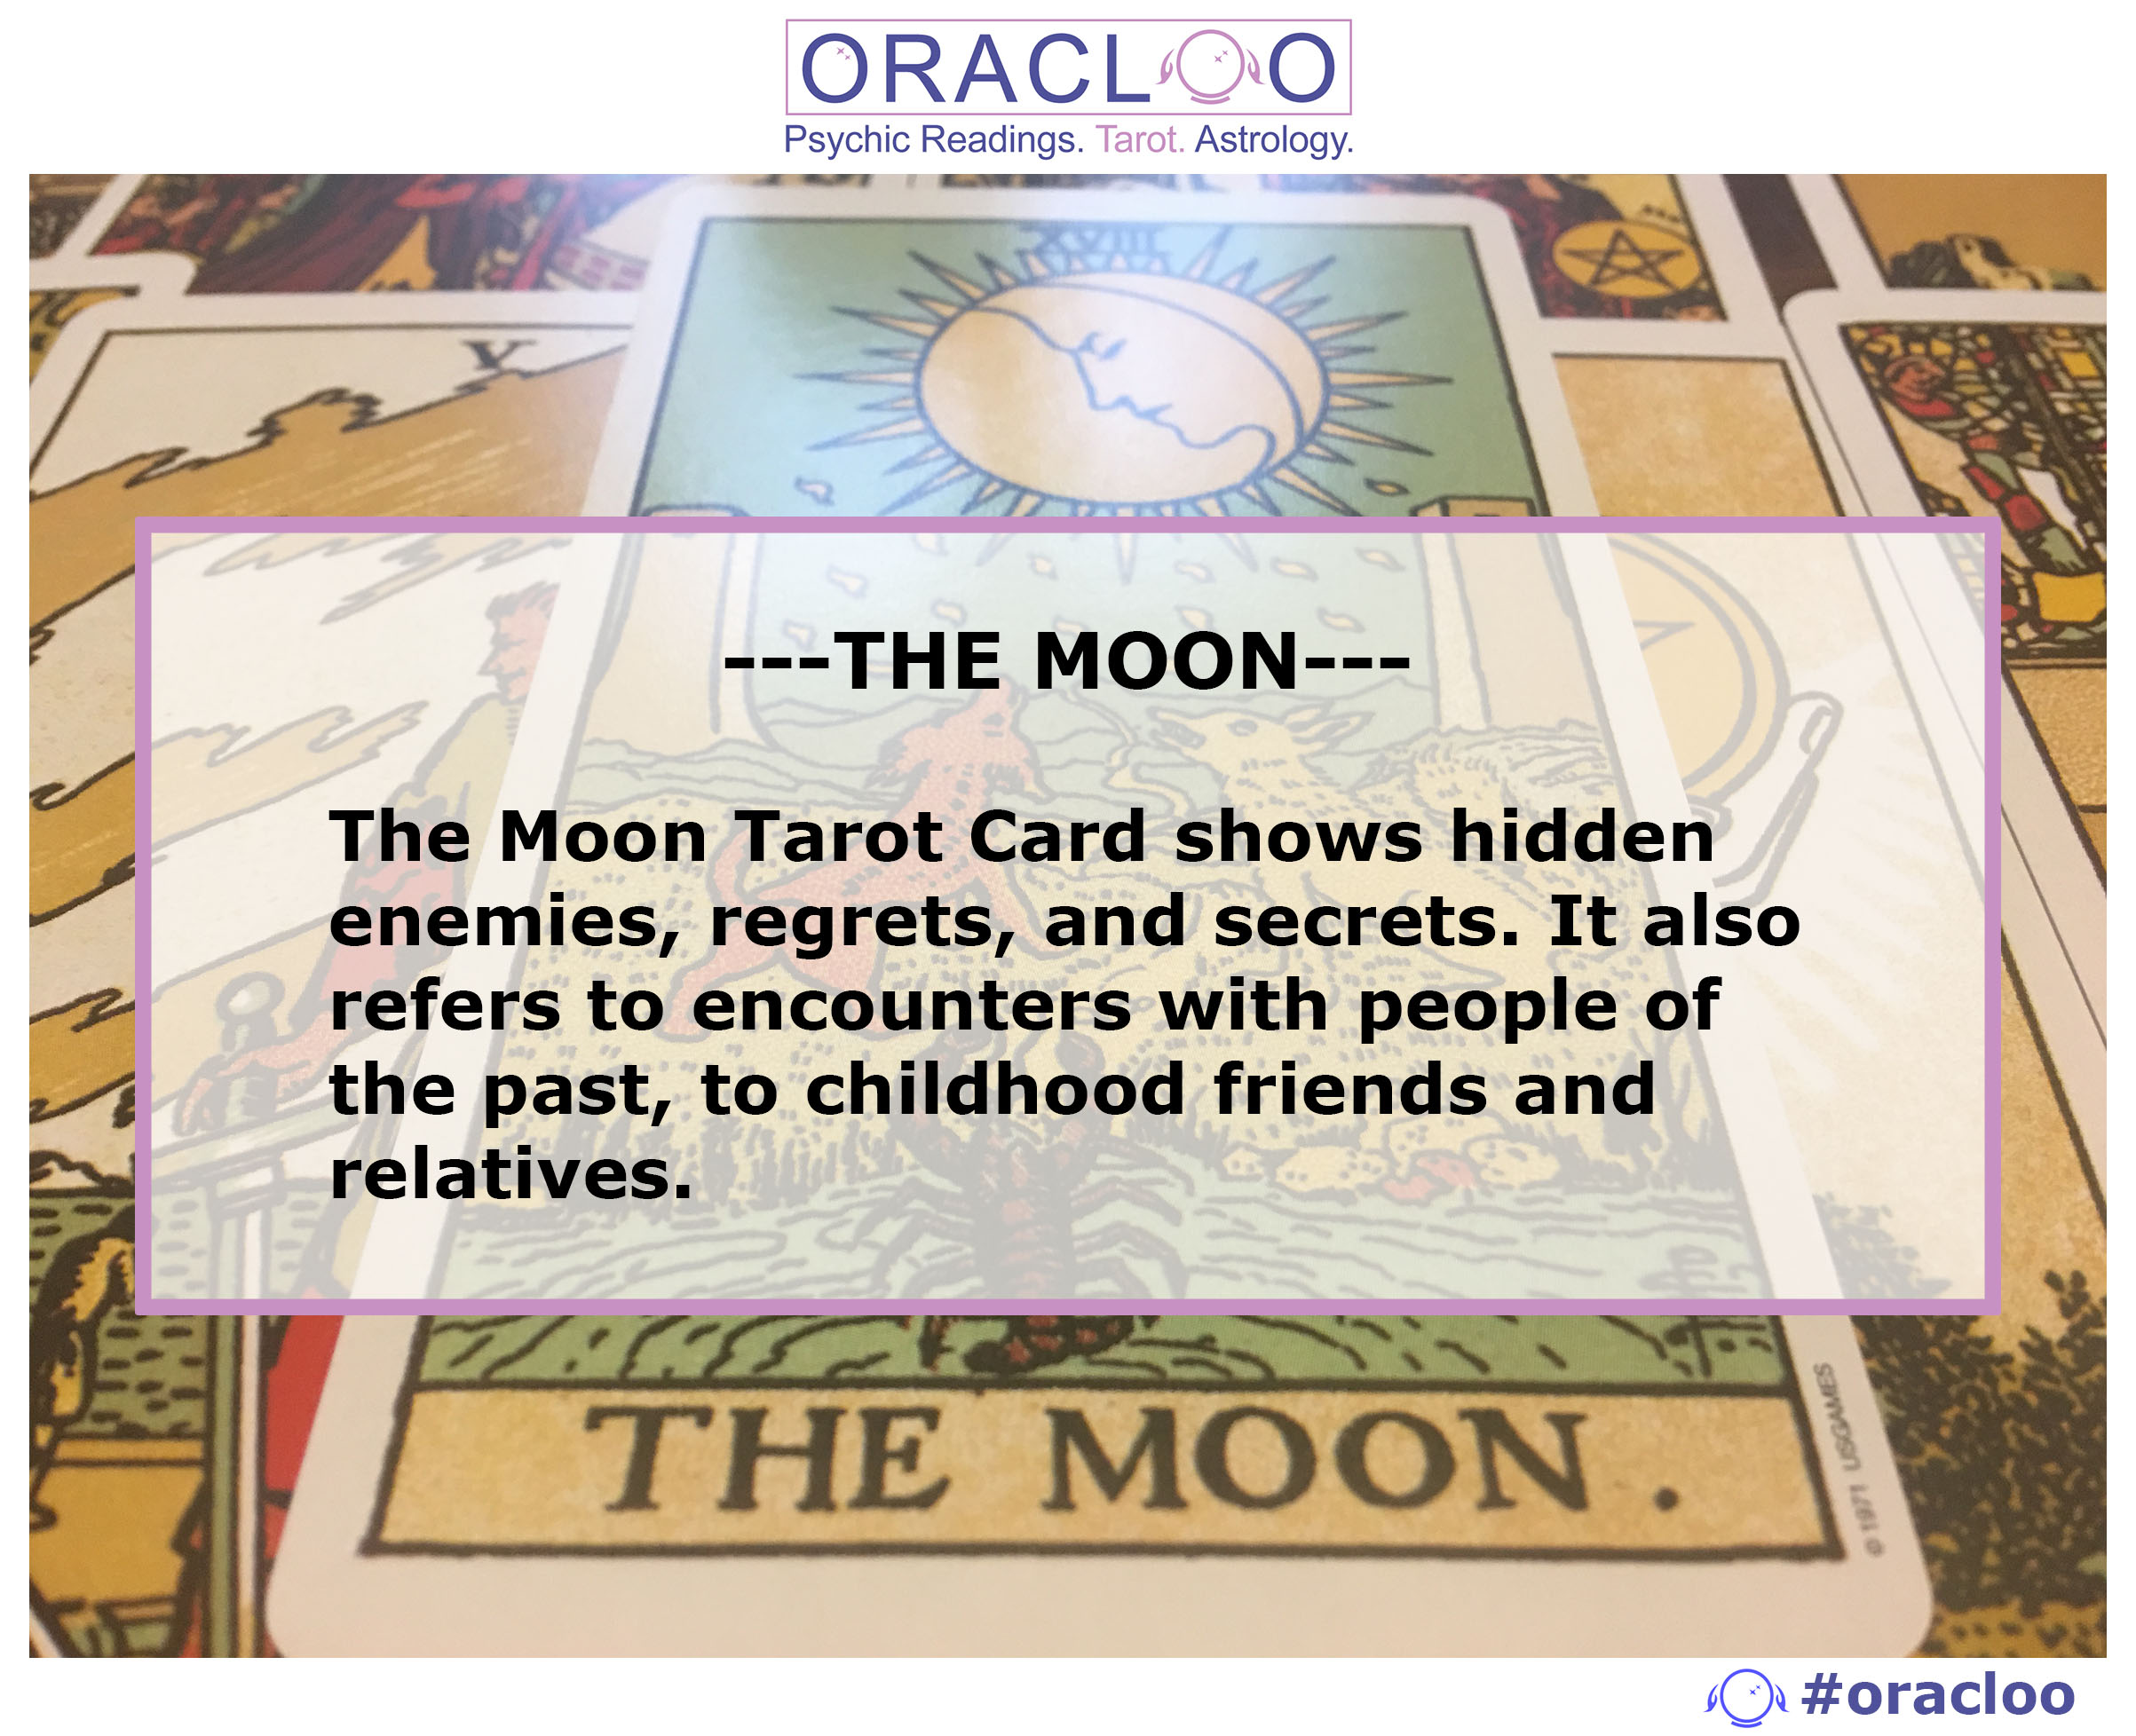 THE MOON tarot card